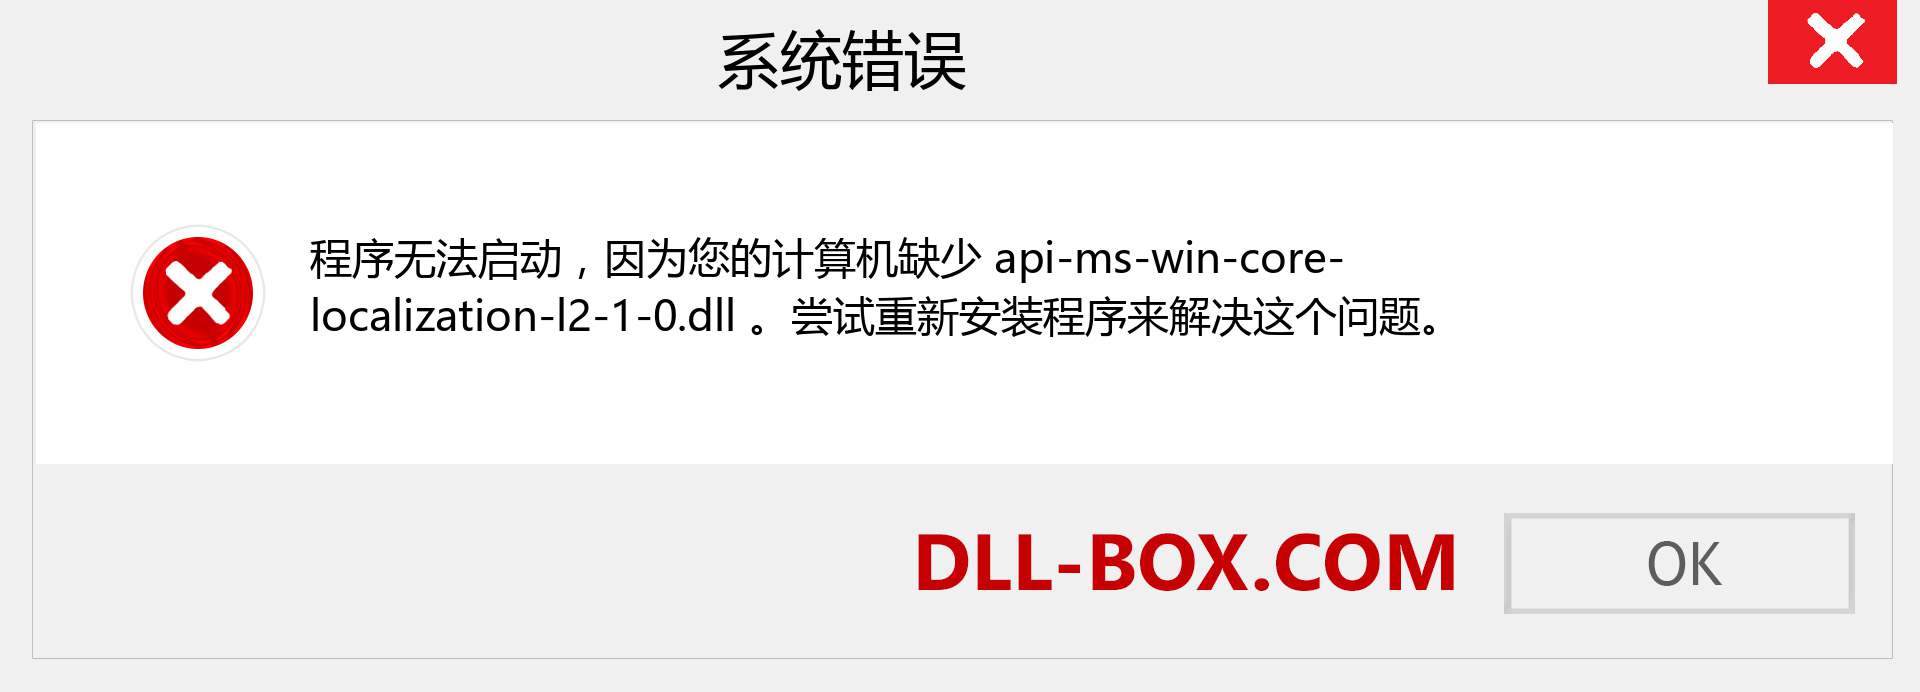 api-ms-win-core-localization-l2-1-0.dll 文件丢失？。 适用于 Windows 7、8、10 的下载 - 修复 Windows、照片、图像上的 api-ms-win-core-localization-l2-1-0 dll 丢失错误